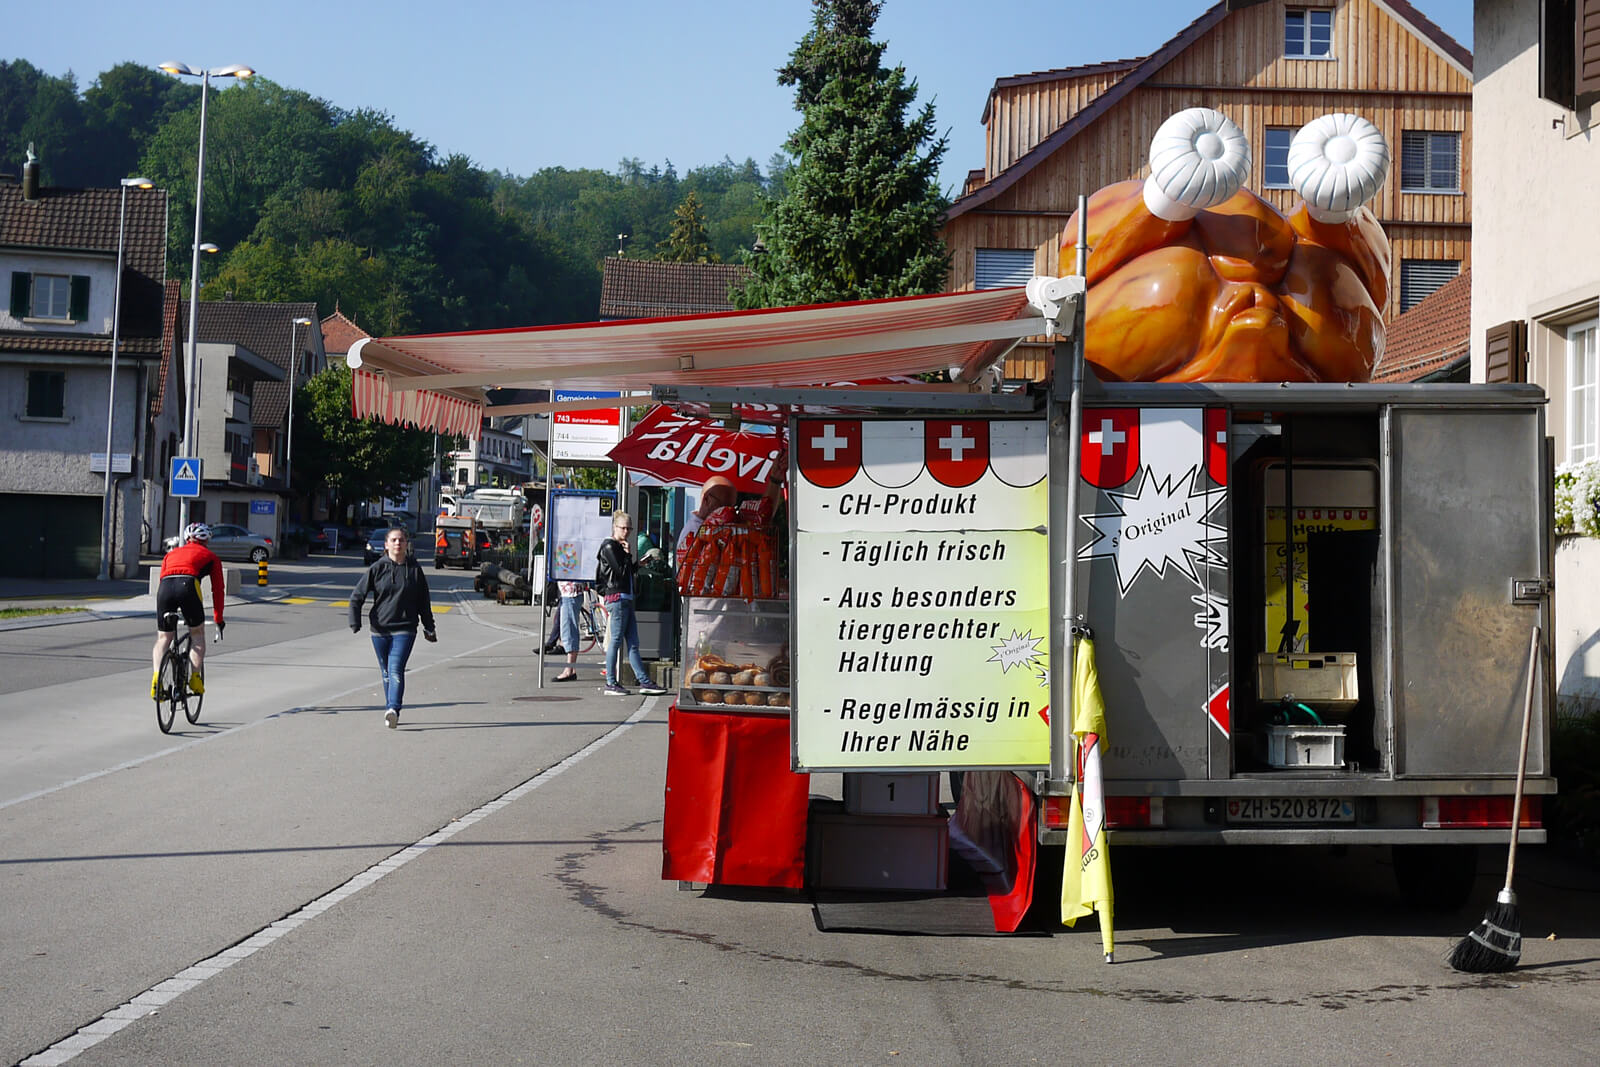 Roasted Chicken - Roadside Vendor in Switzerland